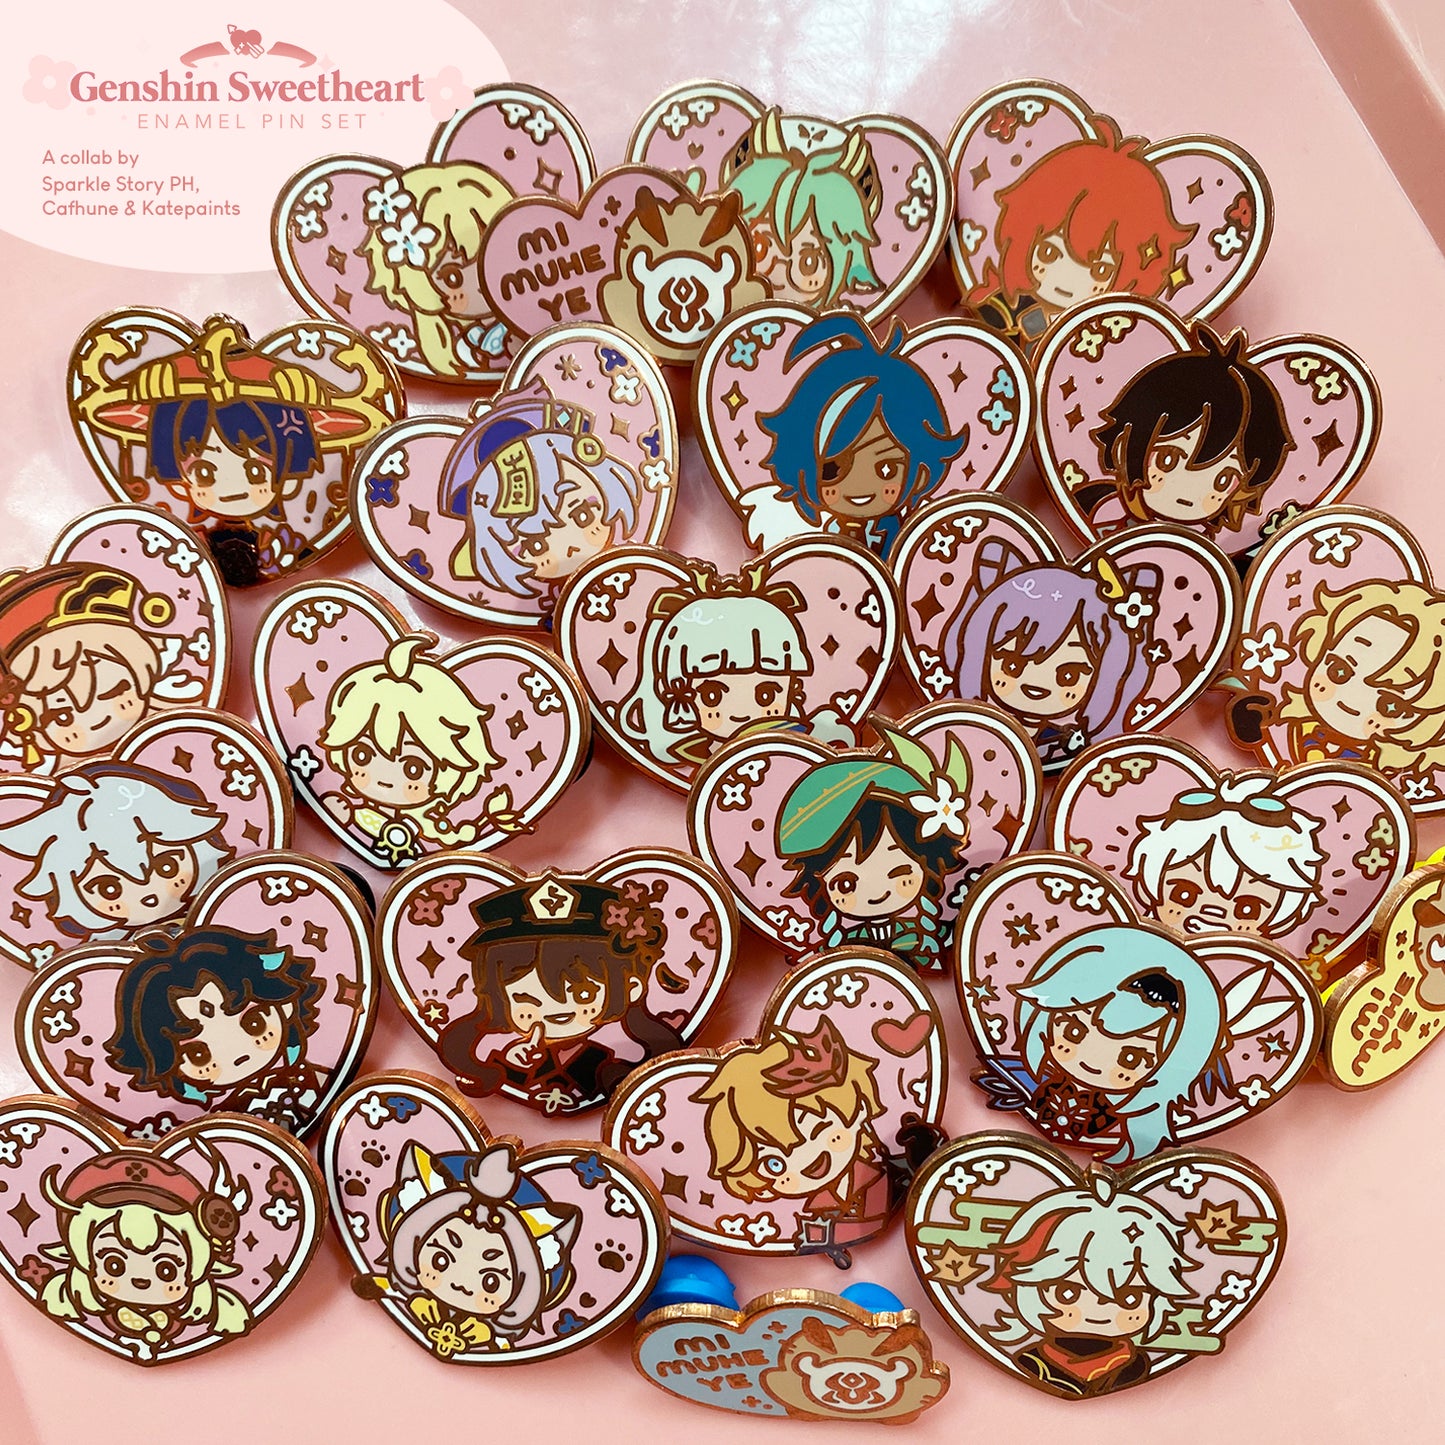 Genshin Sweethearts Pins